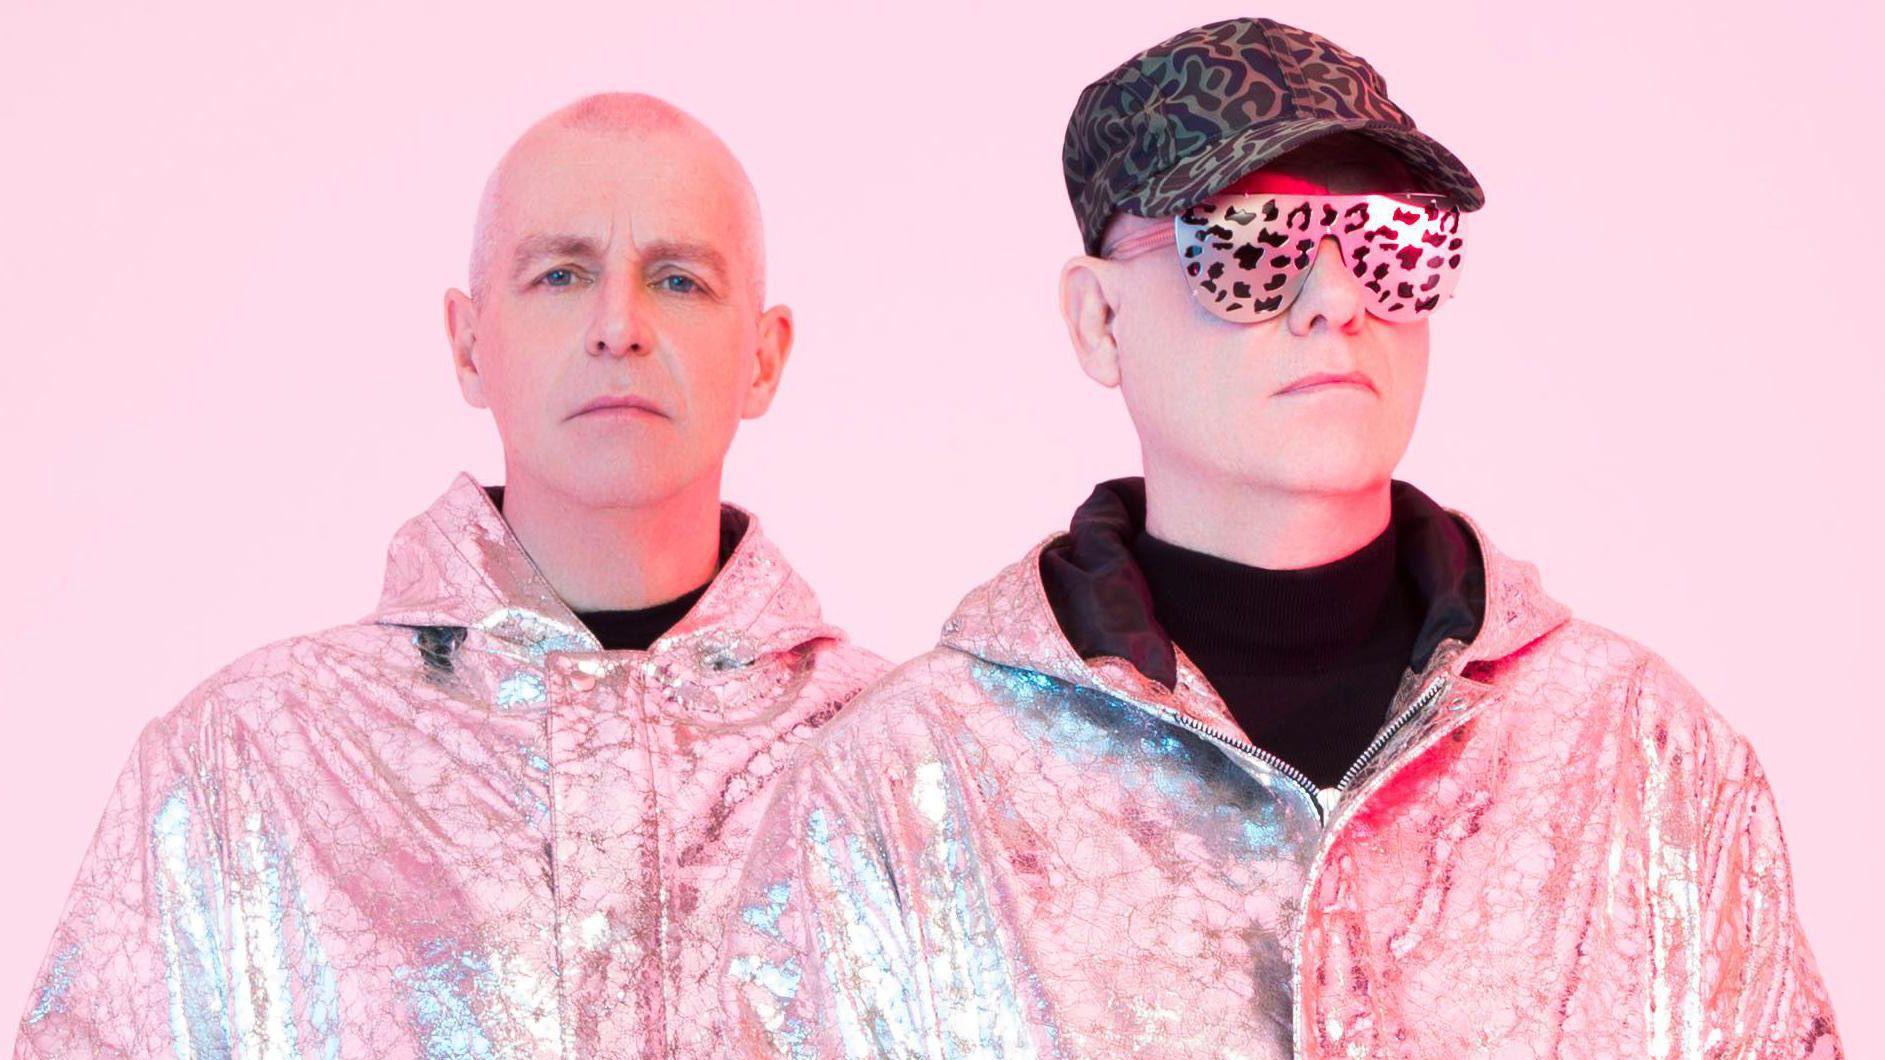 Pet Shop Boys: We should call our next tour Farewell